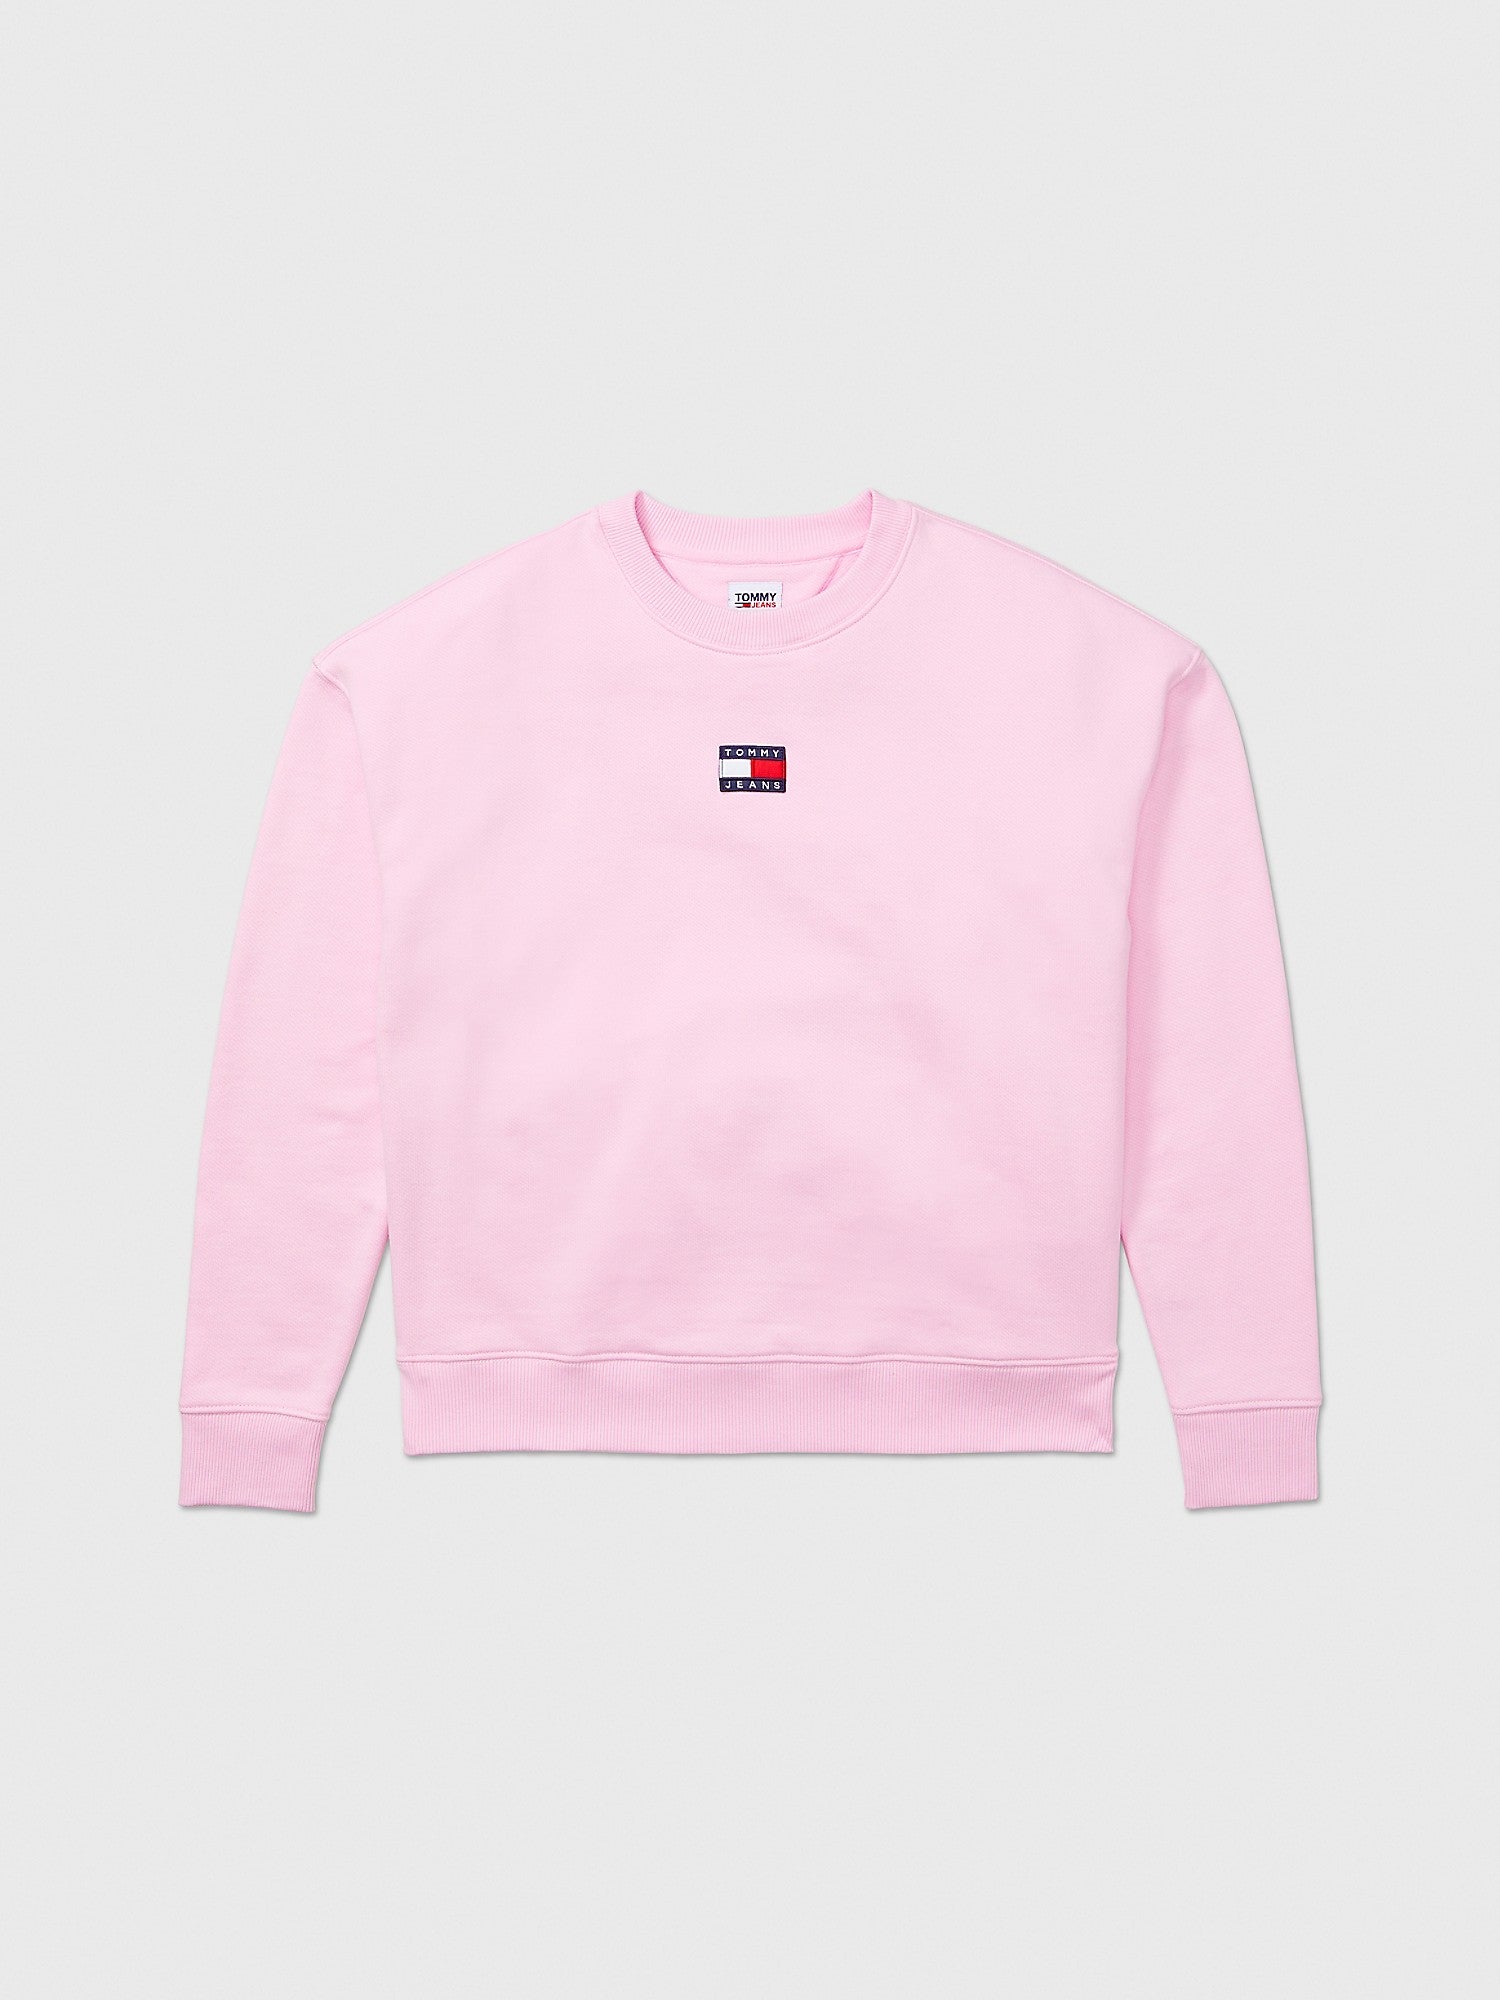 Tommy Hilfiger Women's Size Medium T-Shirt Peach Colored Crew Neck